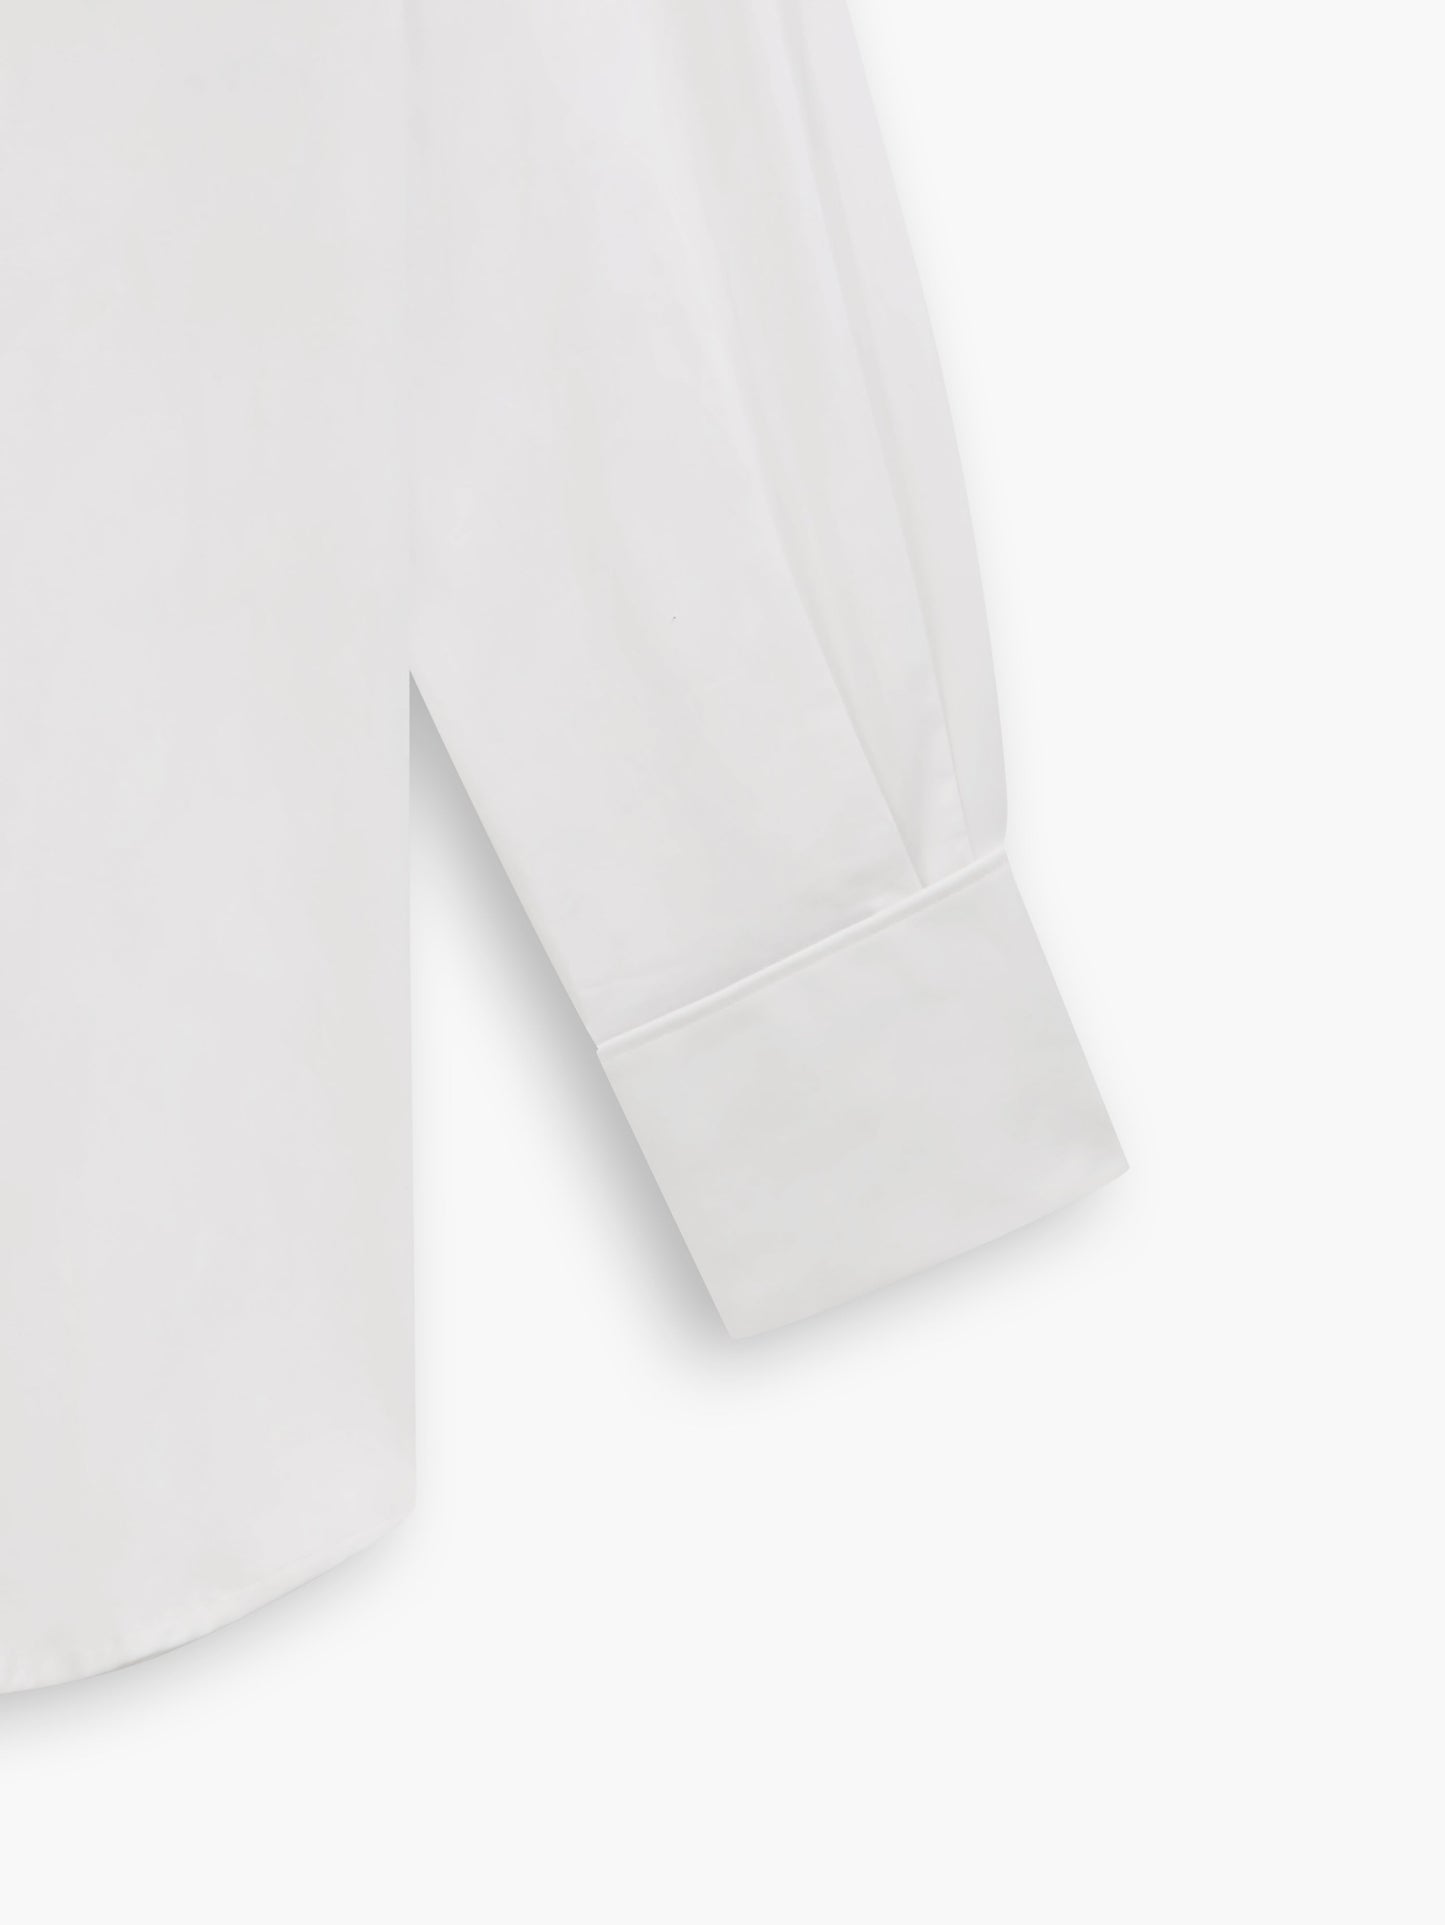 White Stretch Twill Slim Fit Double Cuff Classic Collar Shirt